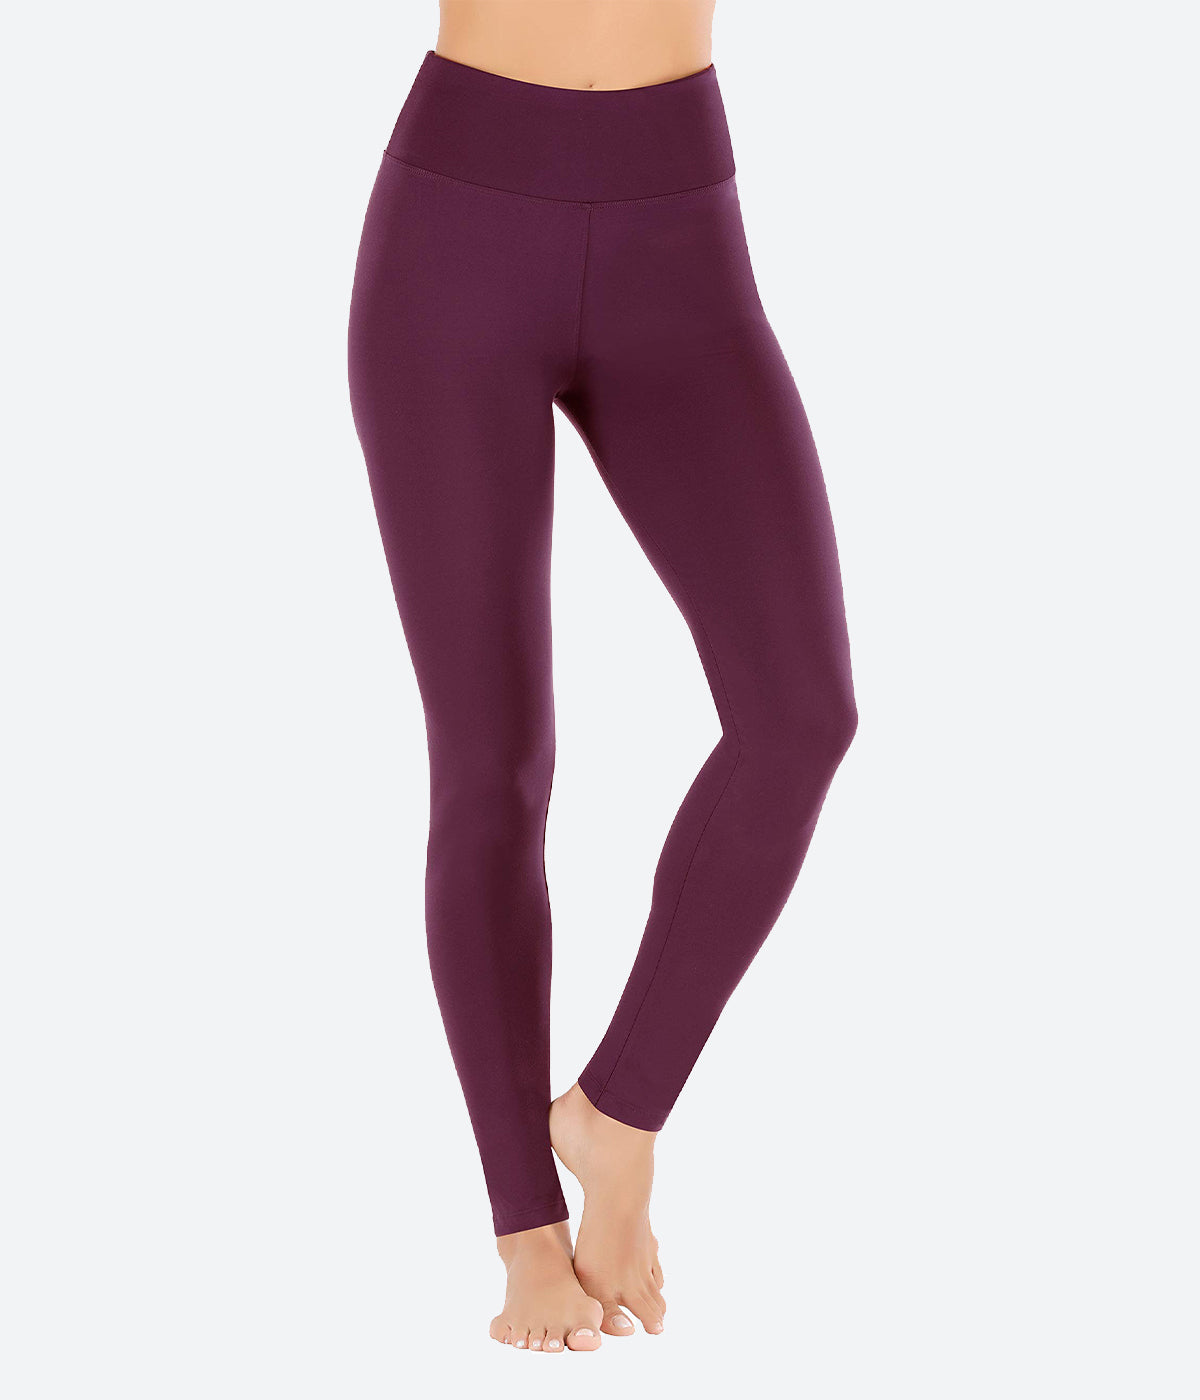  Koolee Healthy Yoga Pants with Pockets Women 3/4